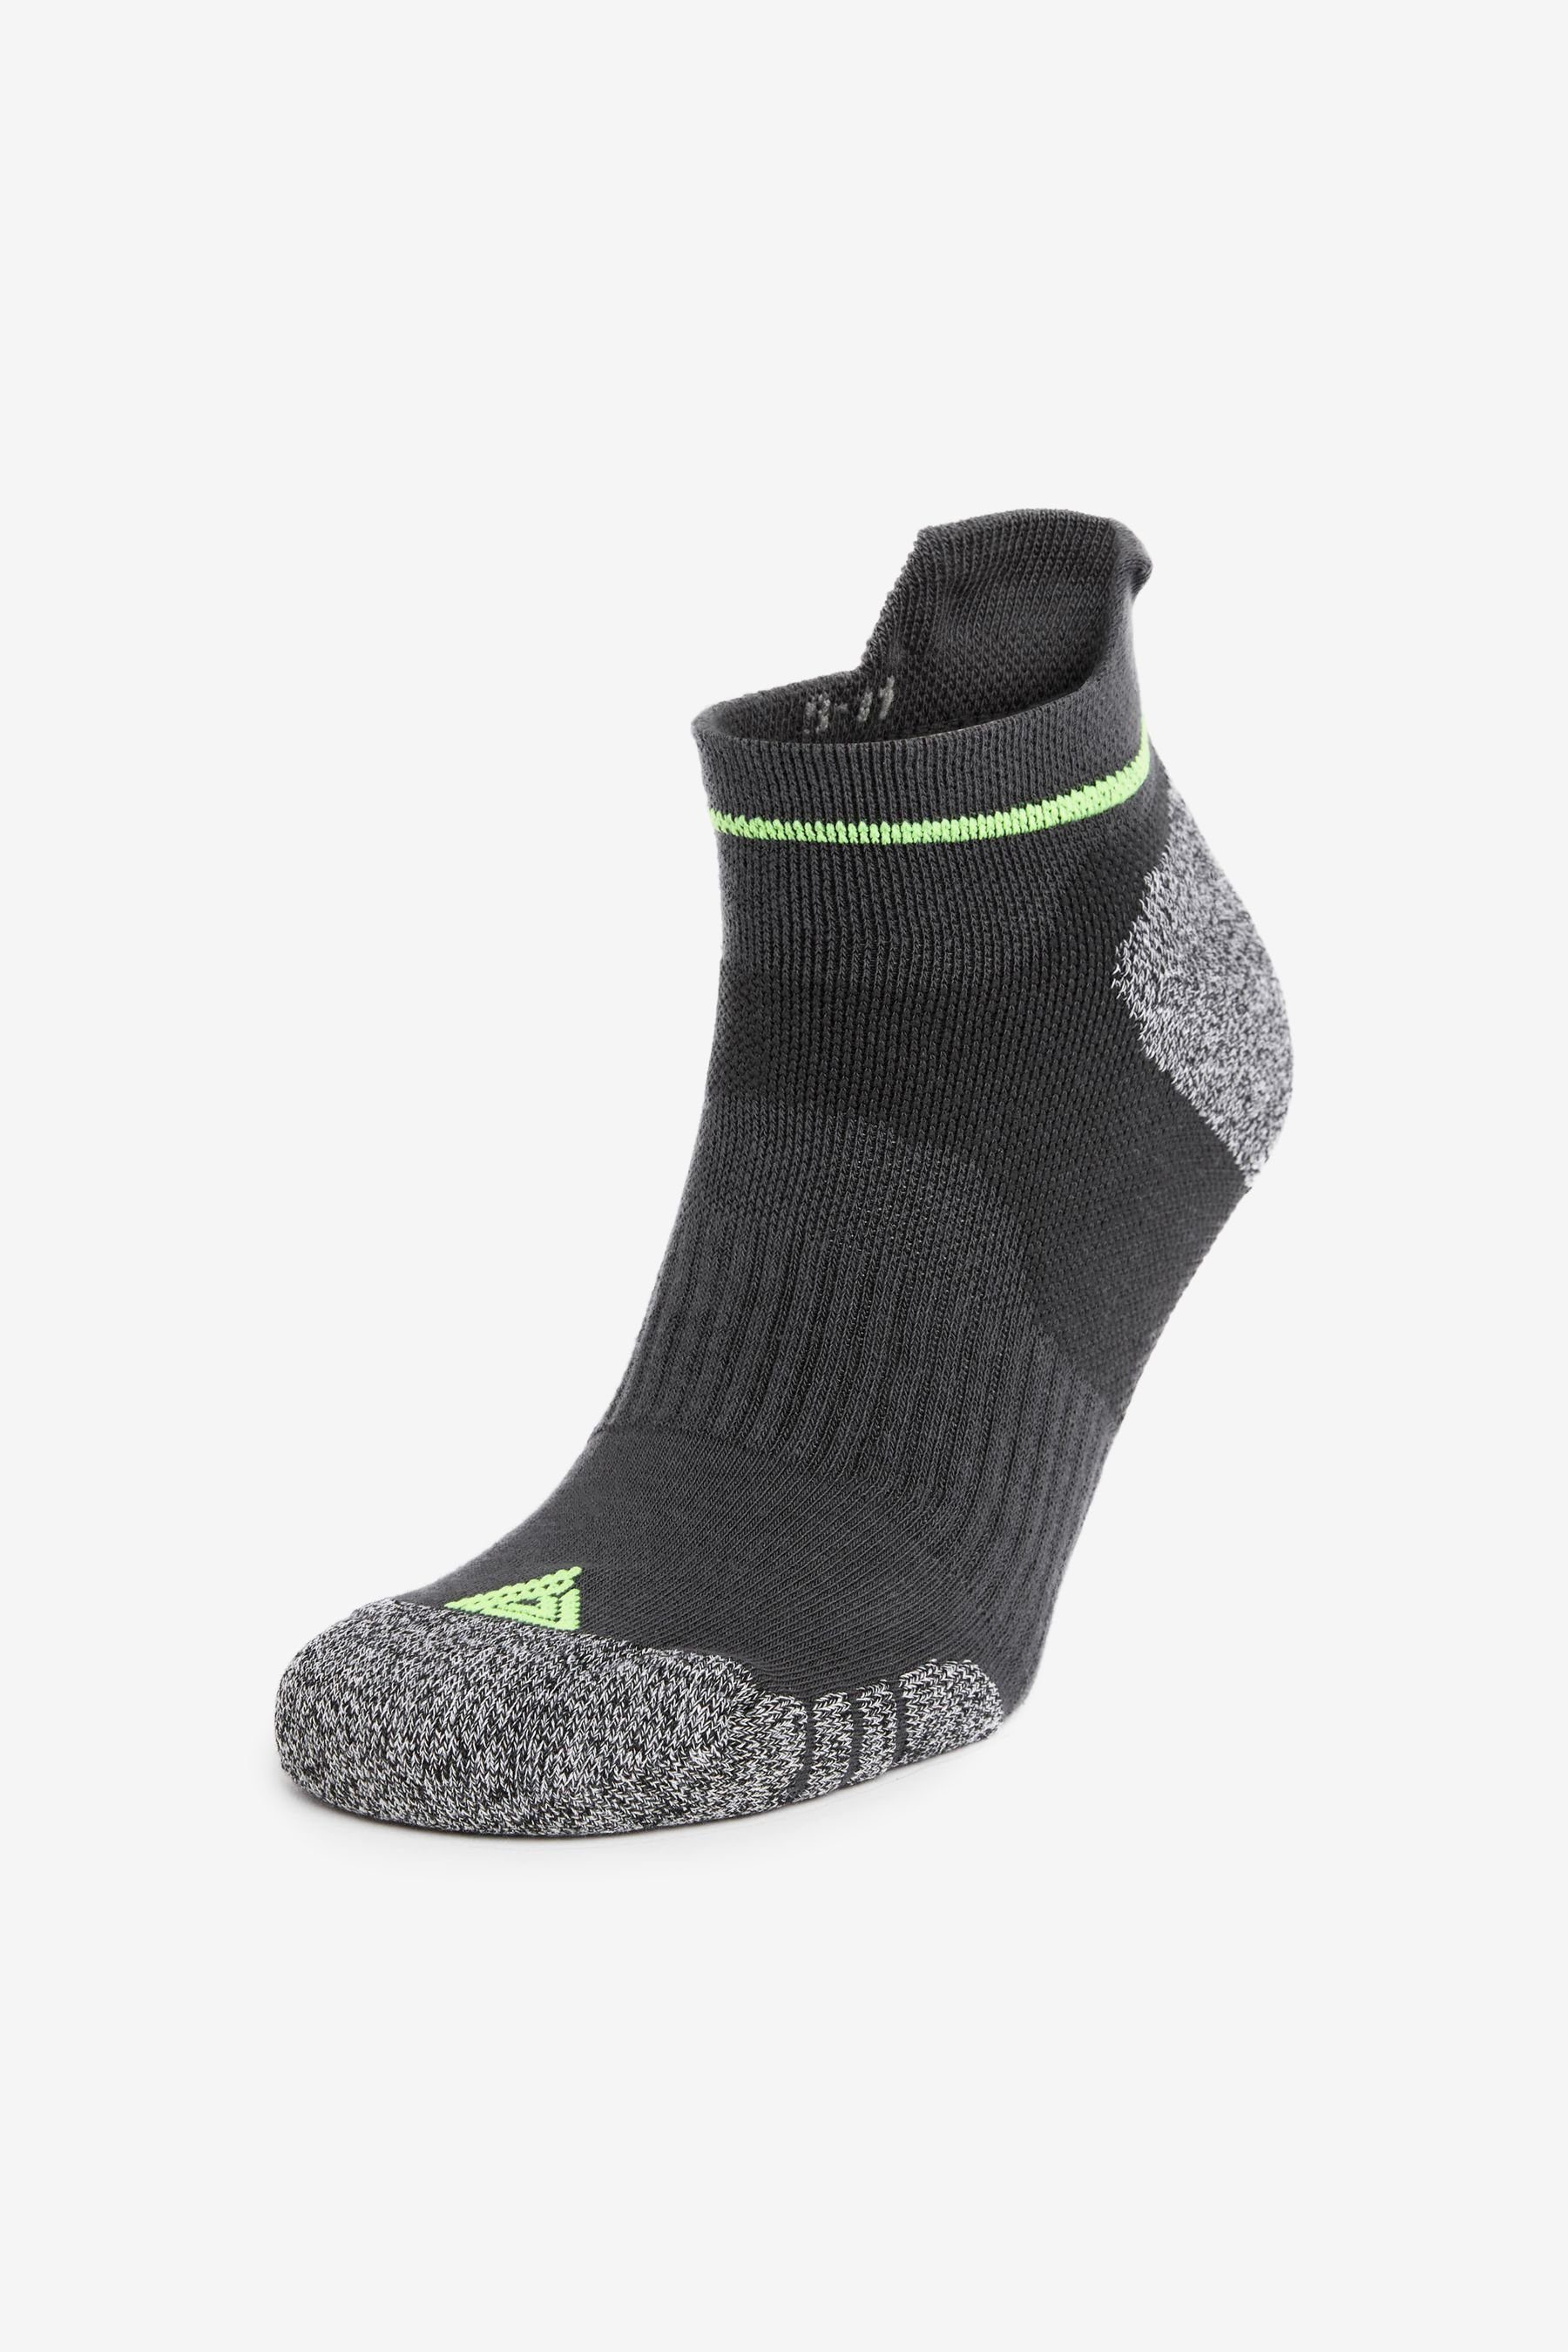 (4-Paar) Socken Next Next Füßlinge im Active Black/White Gepolsterte 4er-Pack